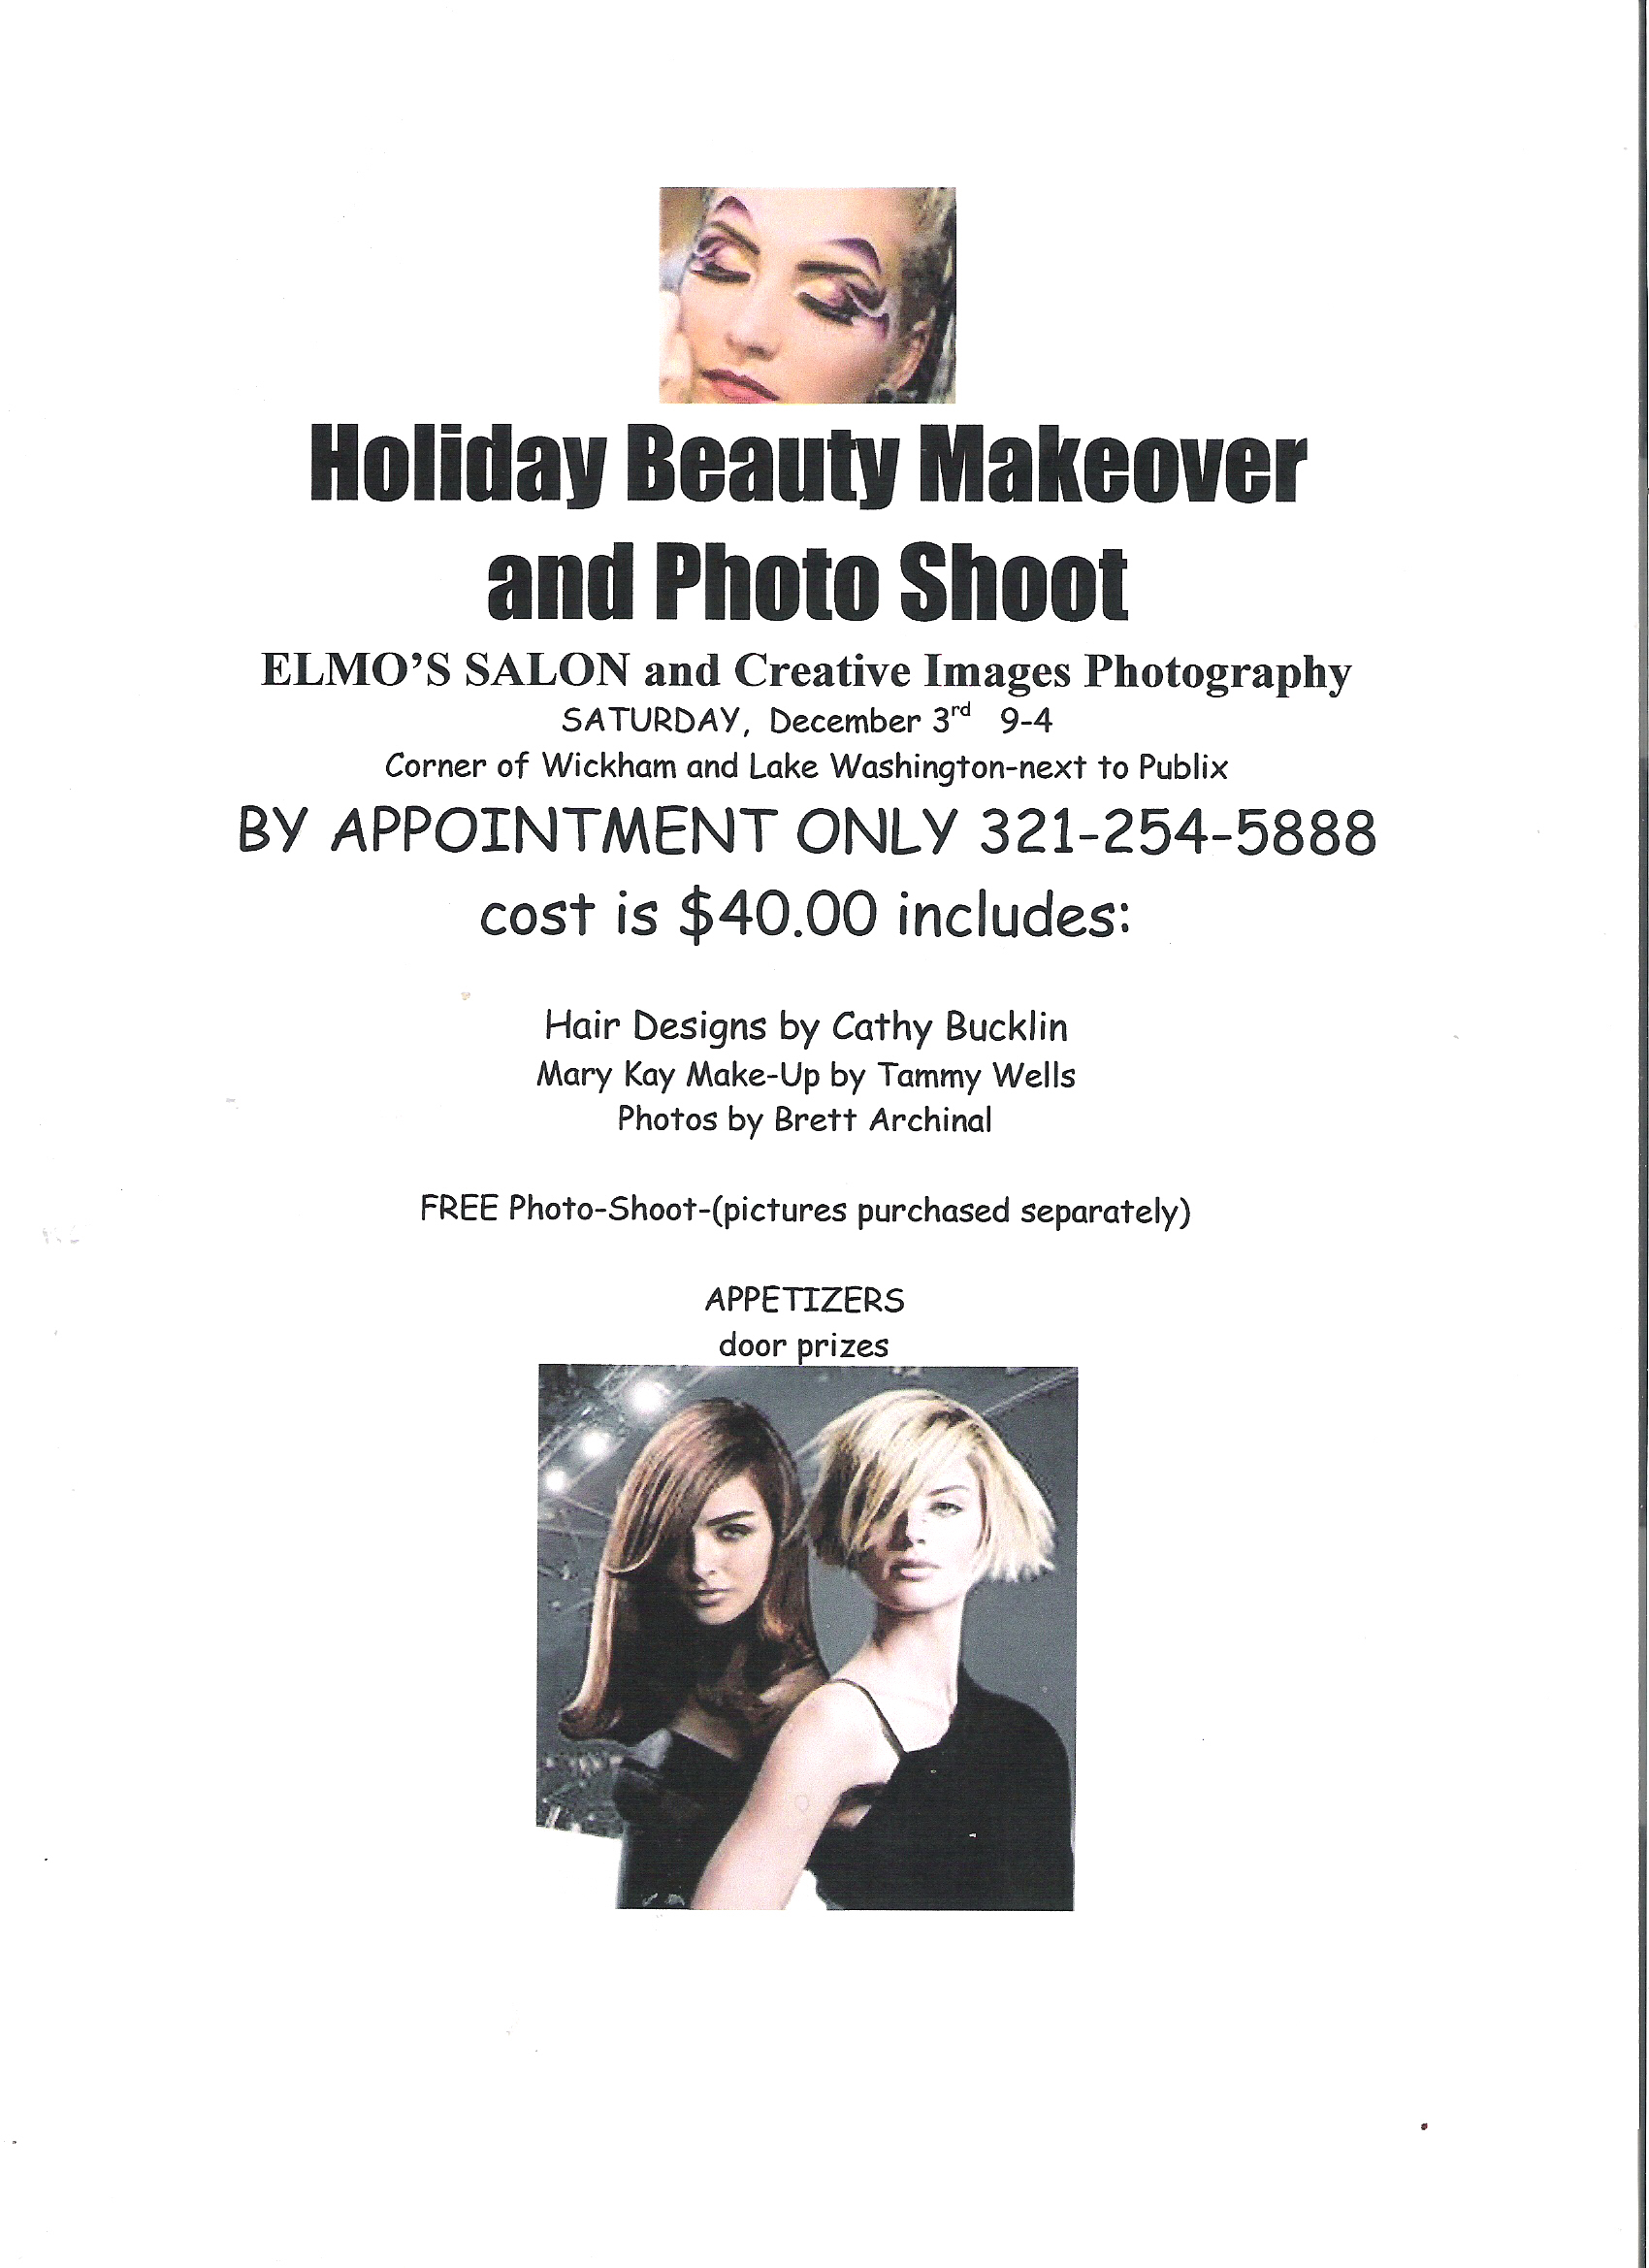 Elmos' Beauty Shop